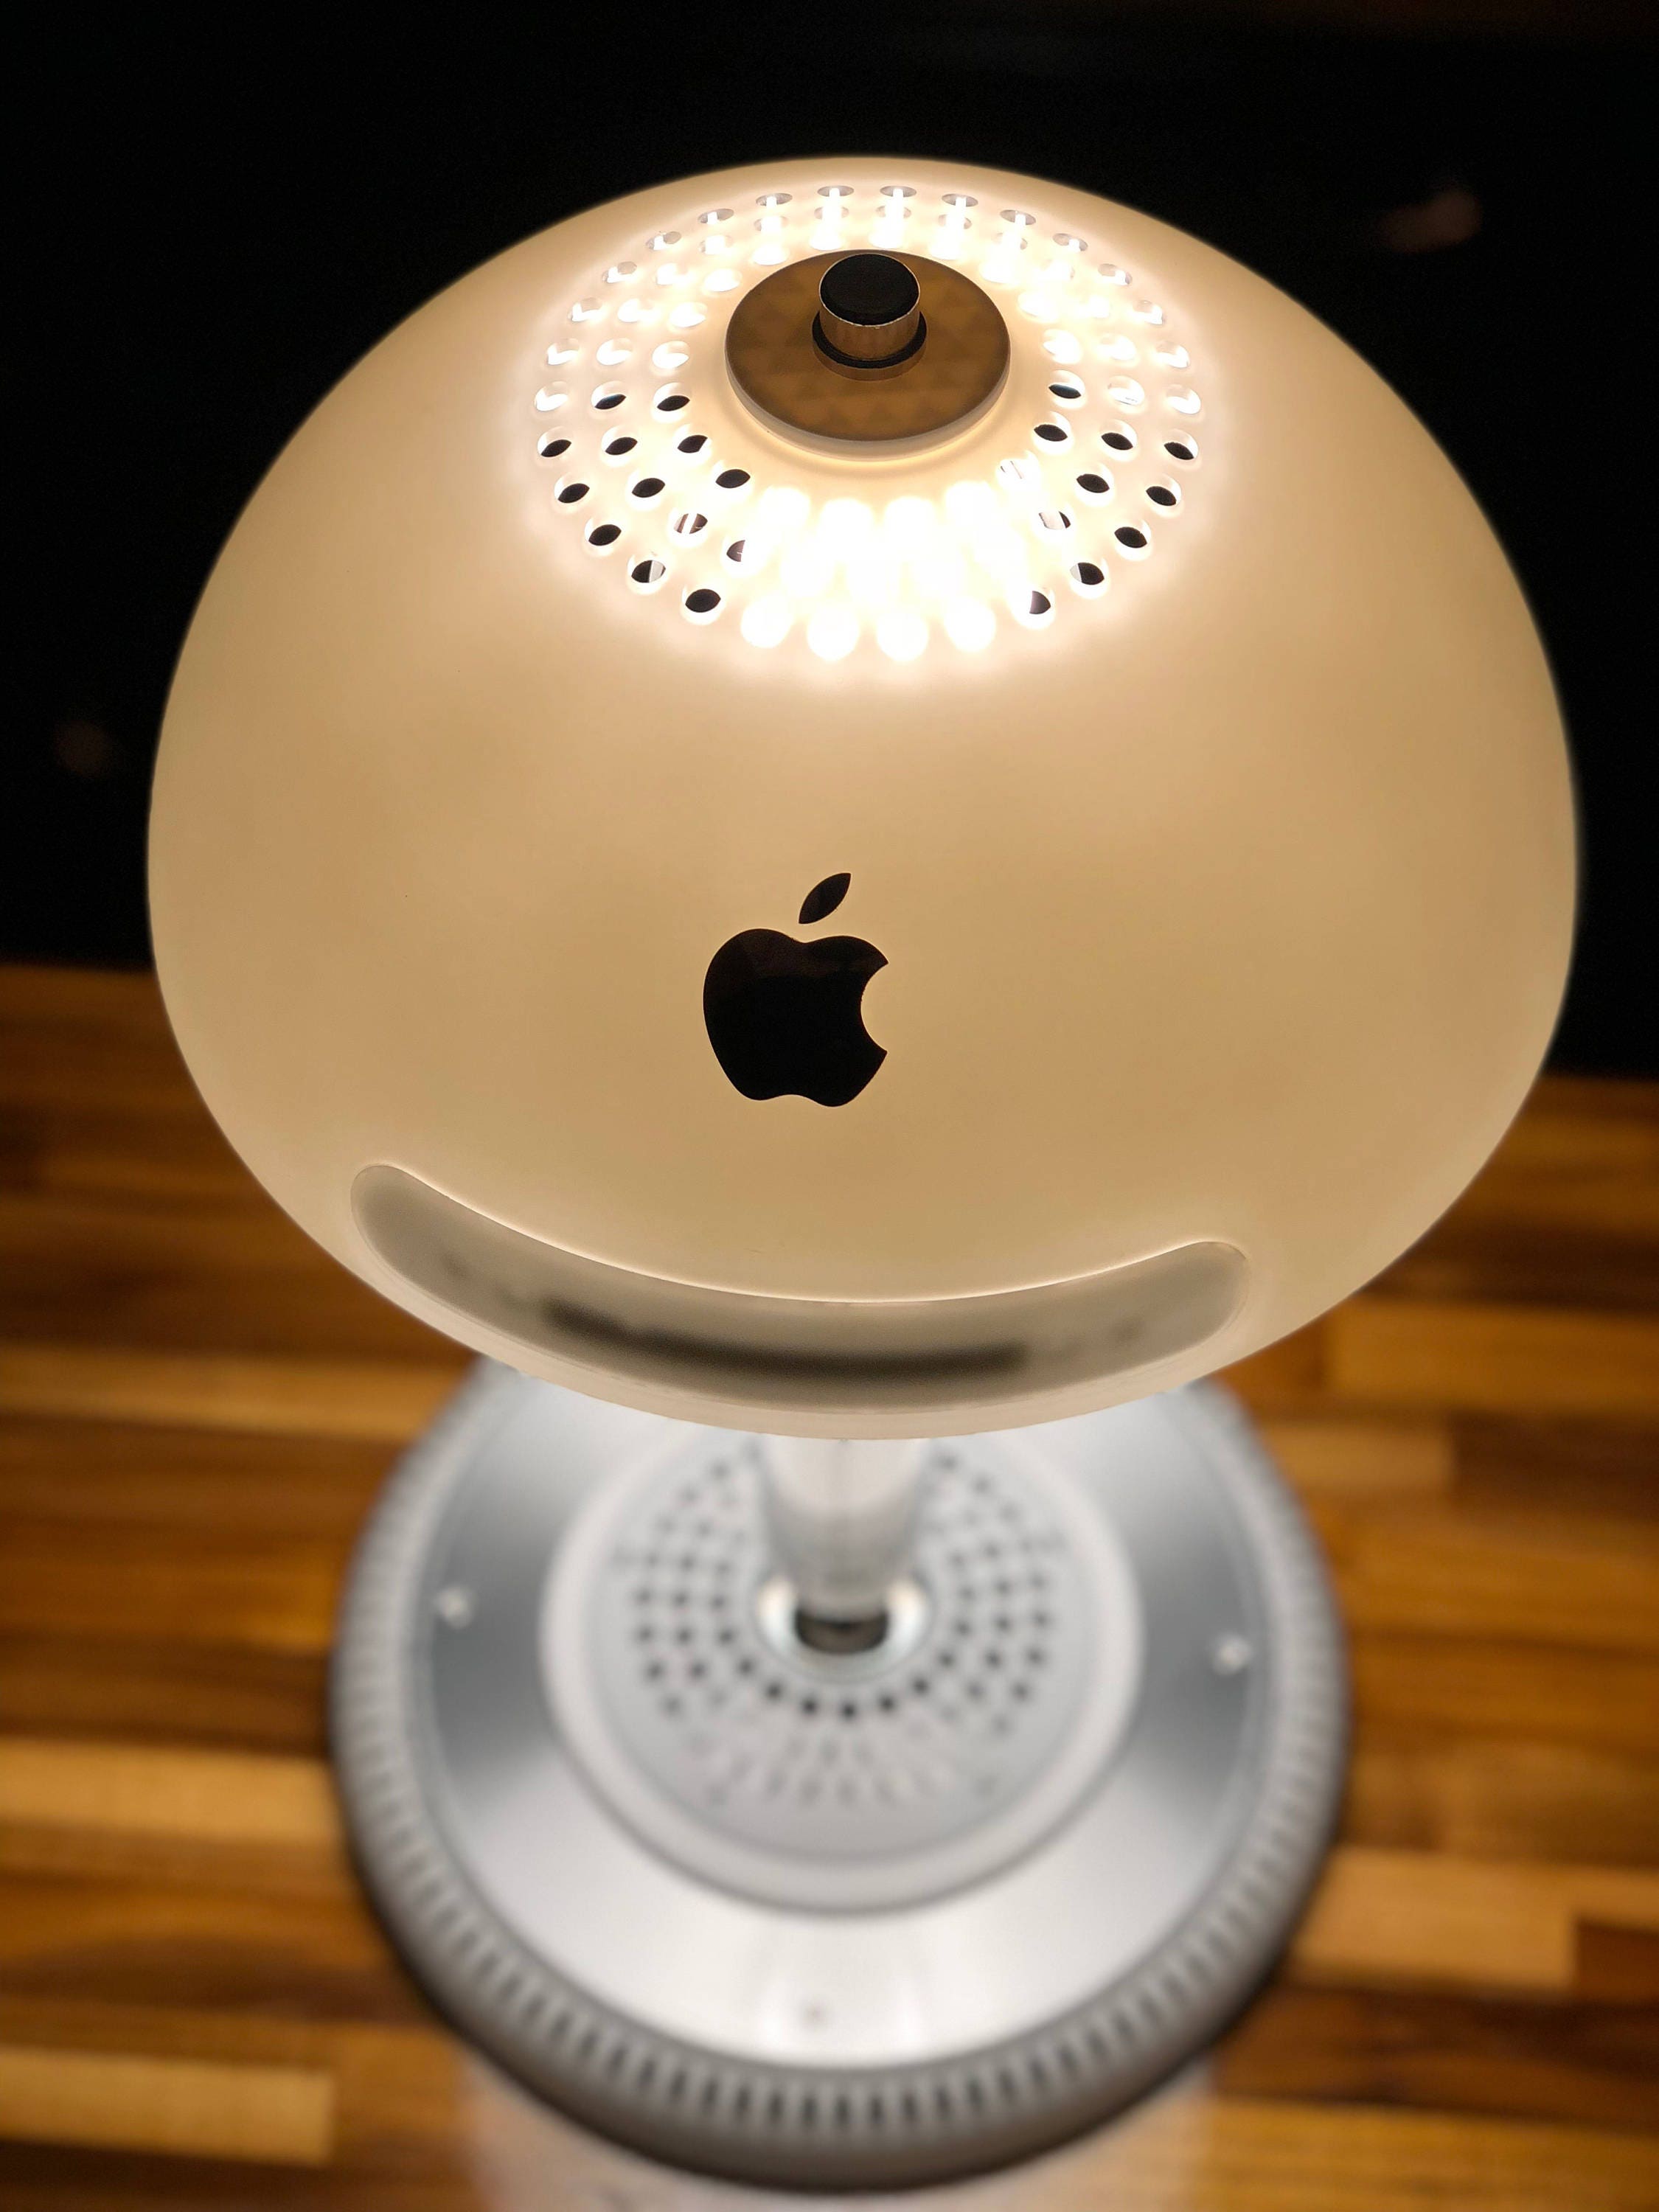 Apple Imac G4 Desk Lamp The Ilamp Etsy